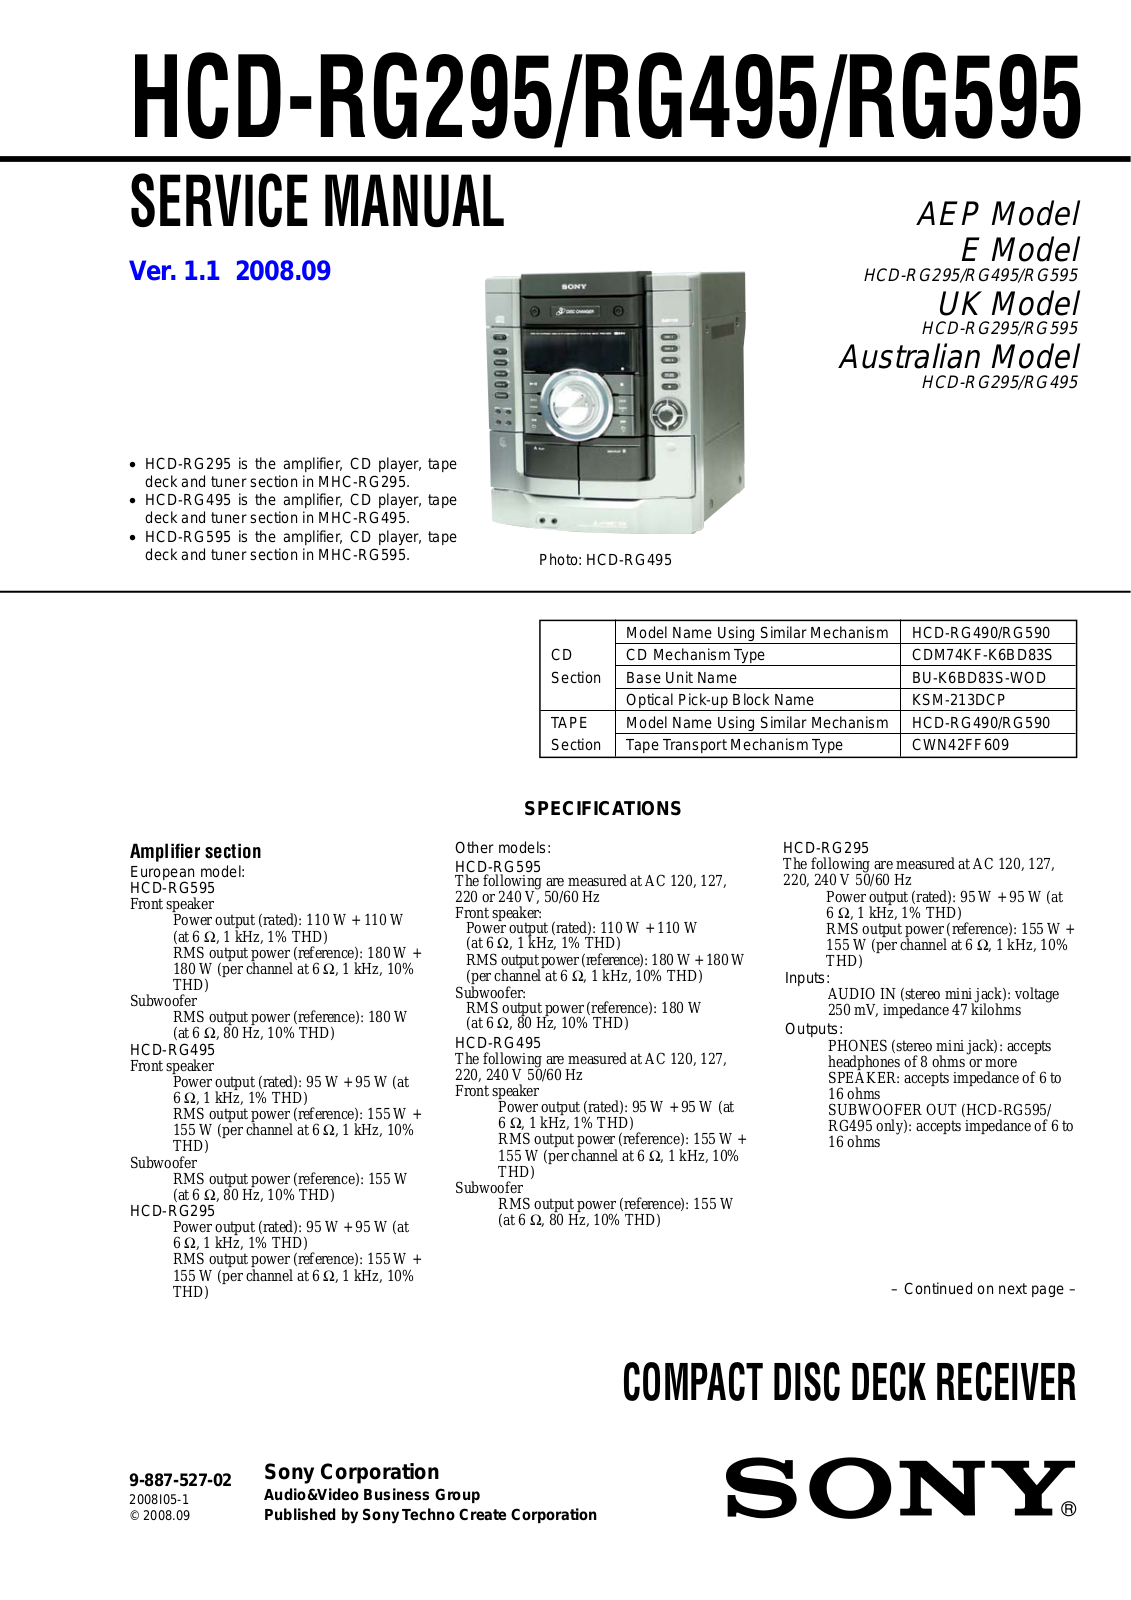 Sony HCD-RG295, HCD-RG495, HCD-RG595 Service Manual